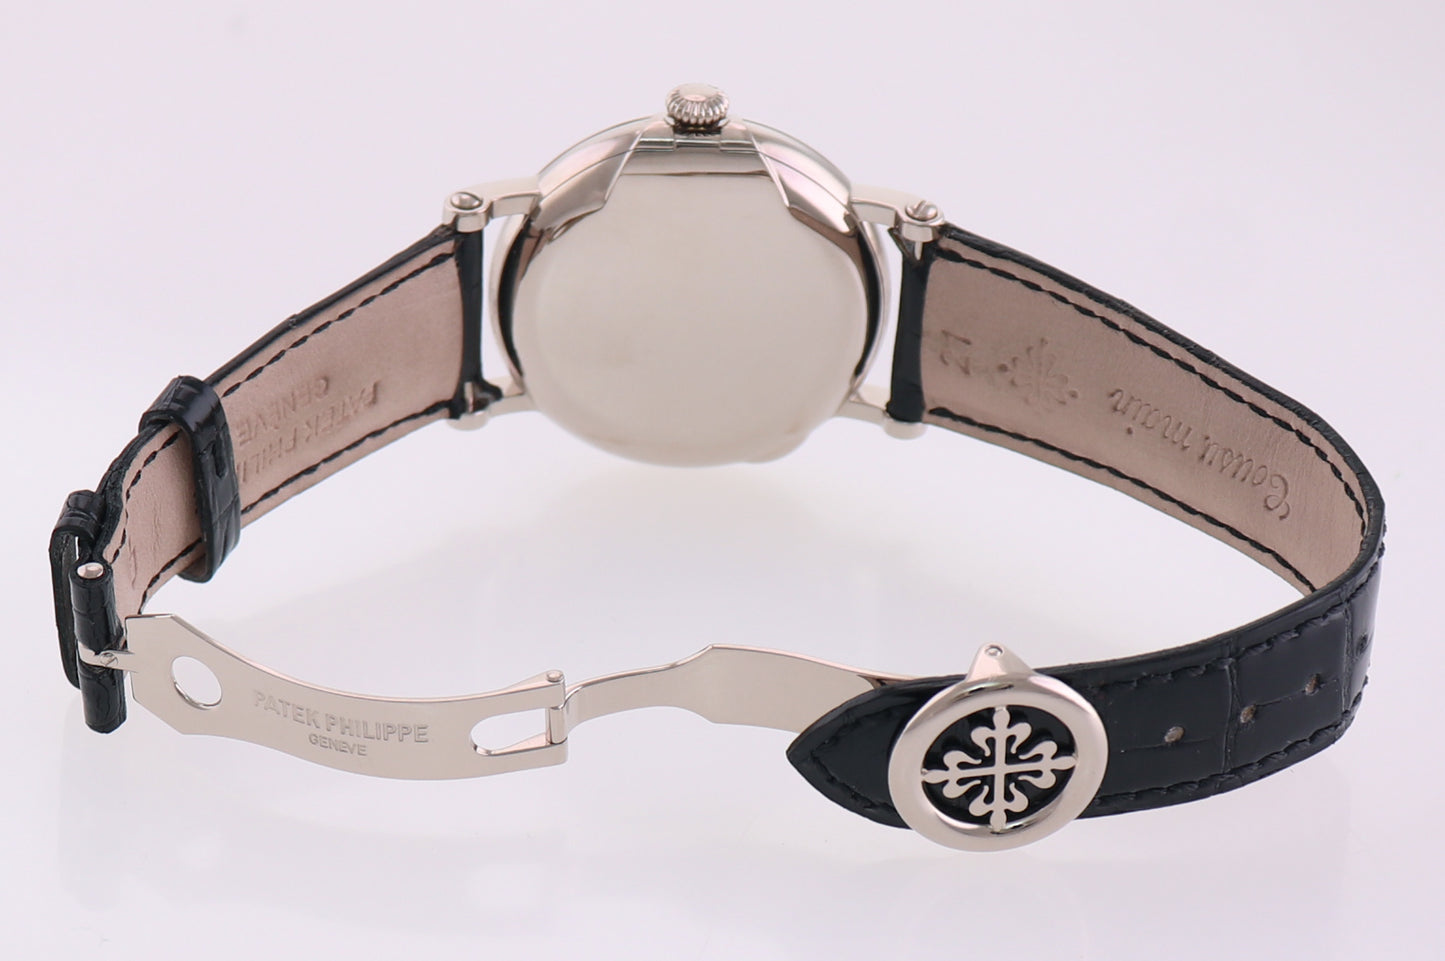 MINT Patek Philippe Tiffany 5153G 38mm White Gold White Dial Calatrava Leather Watch Box